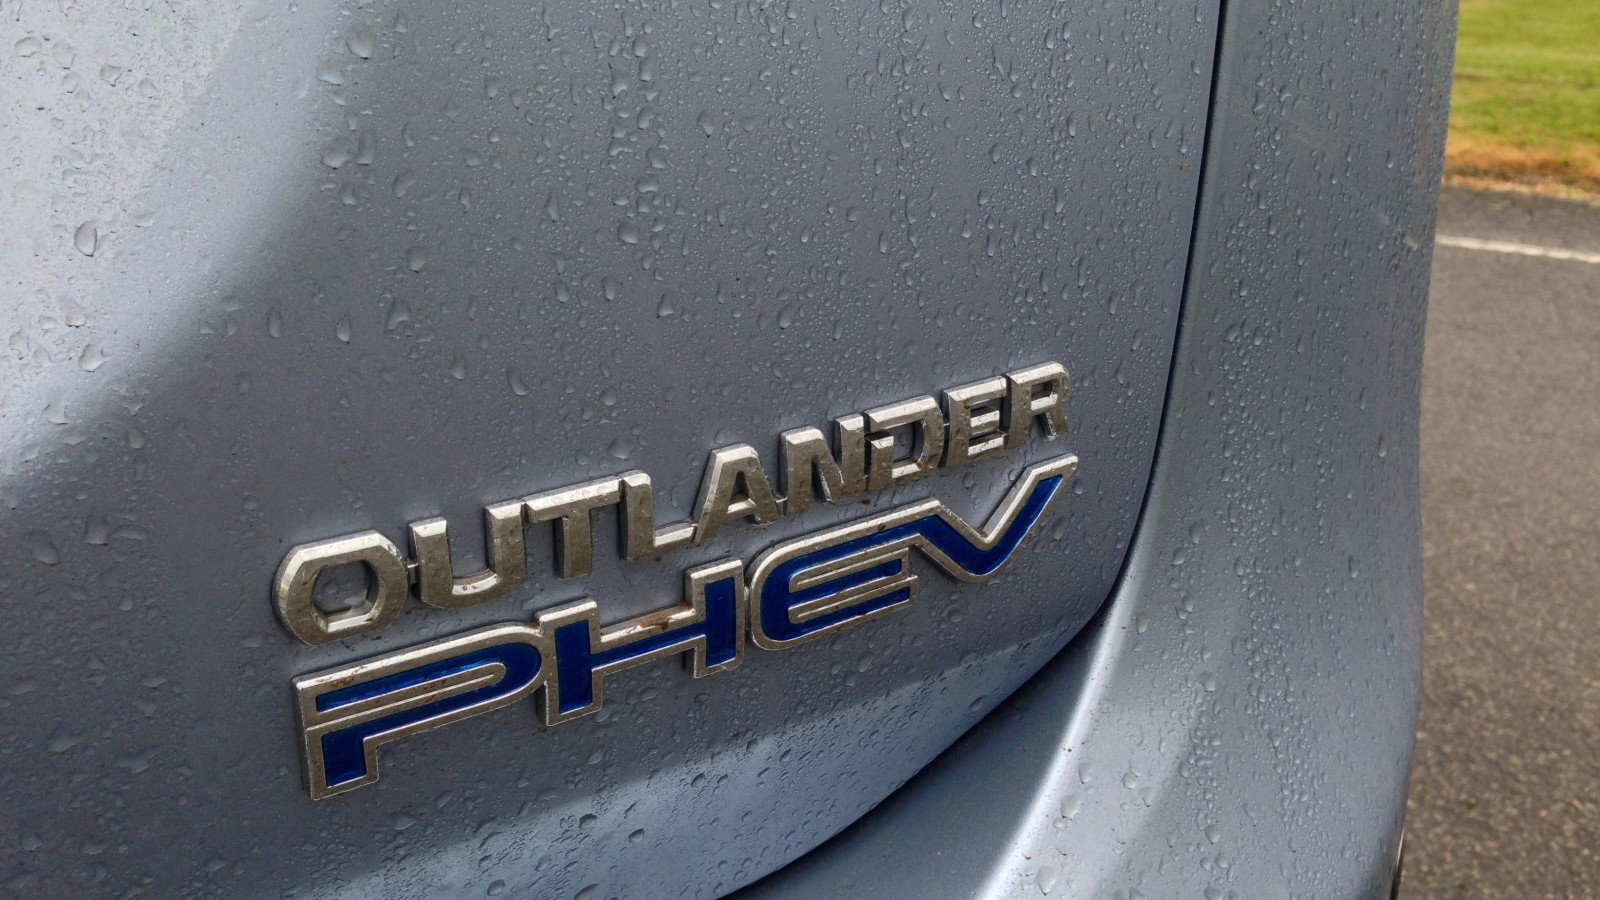 Mitsubishi Outlander Plug-In Hybrid quick drive (European model)